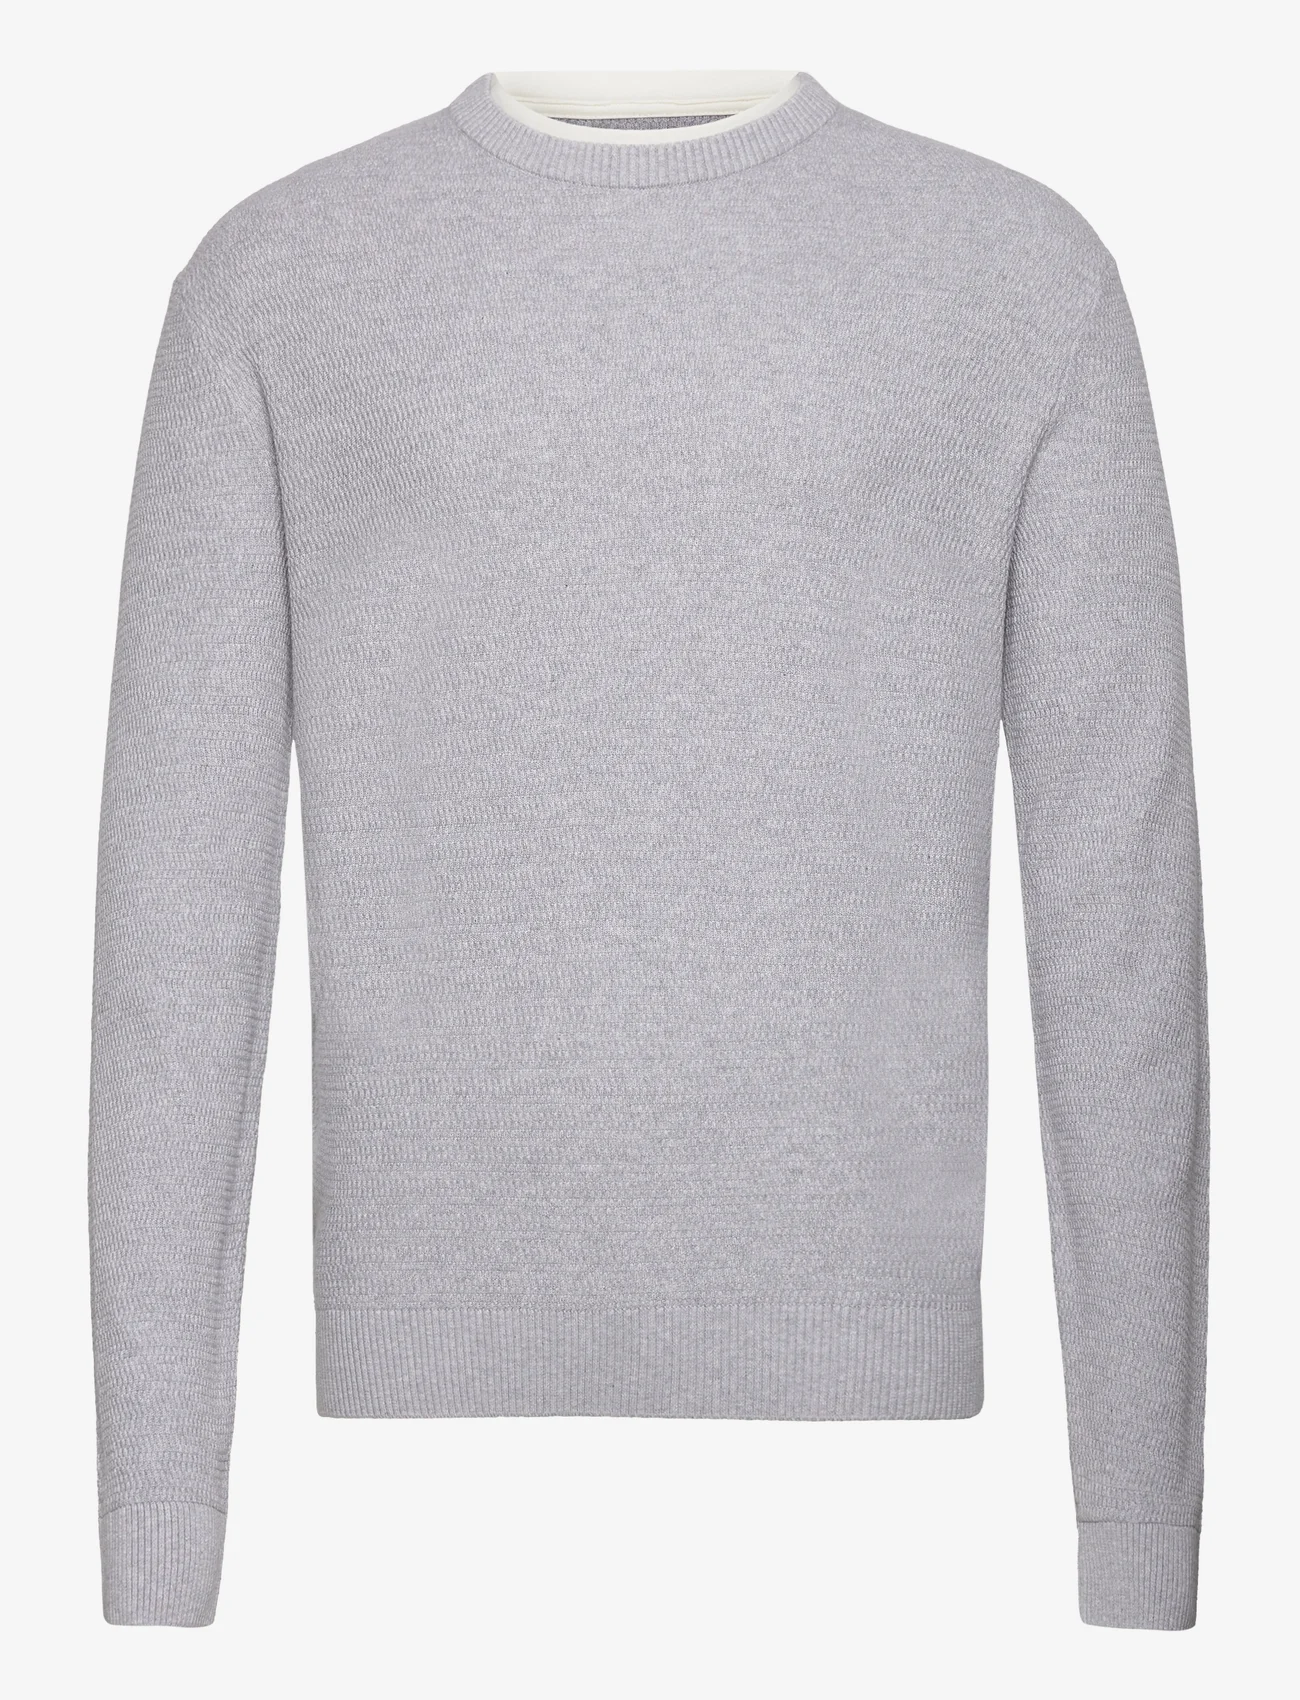 Tom Tailor - structured doublelayer knit - rundhalsad - light stone grey melange - 0